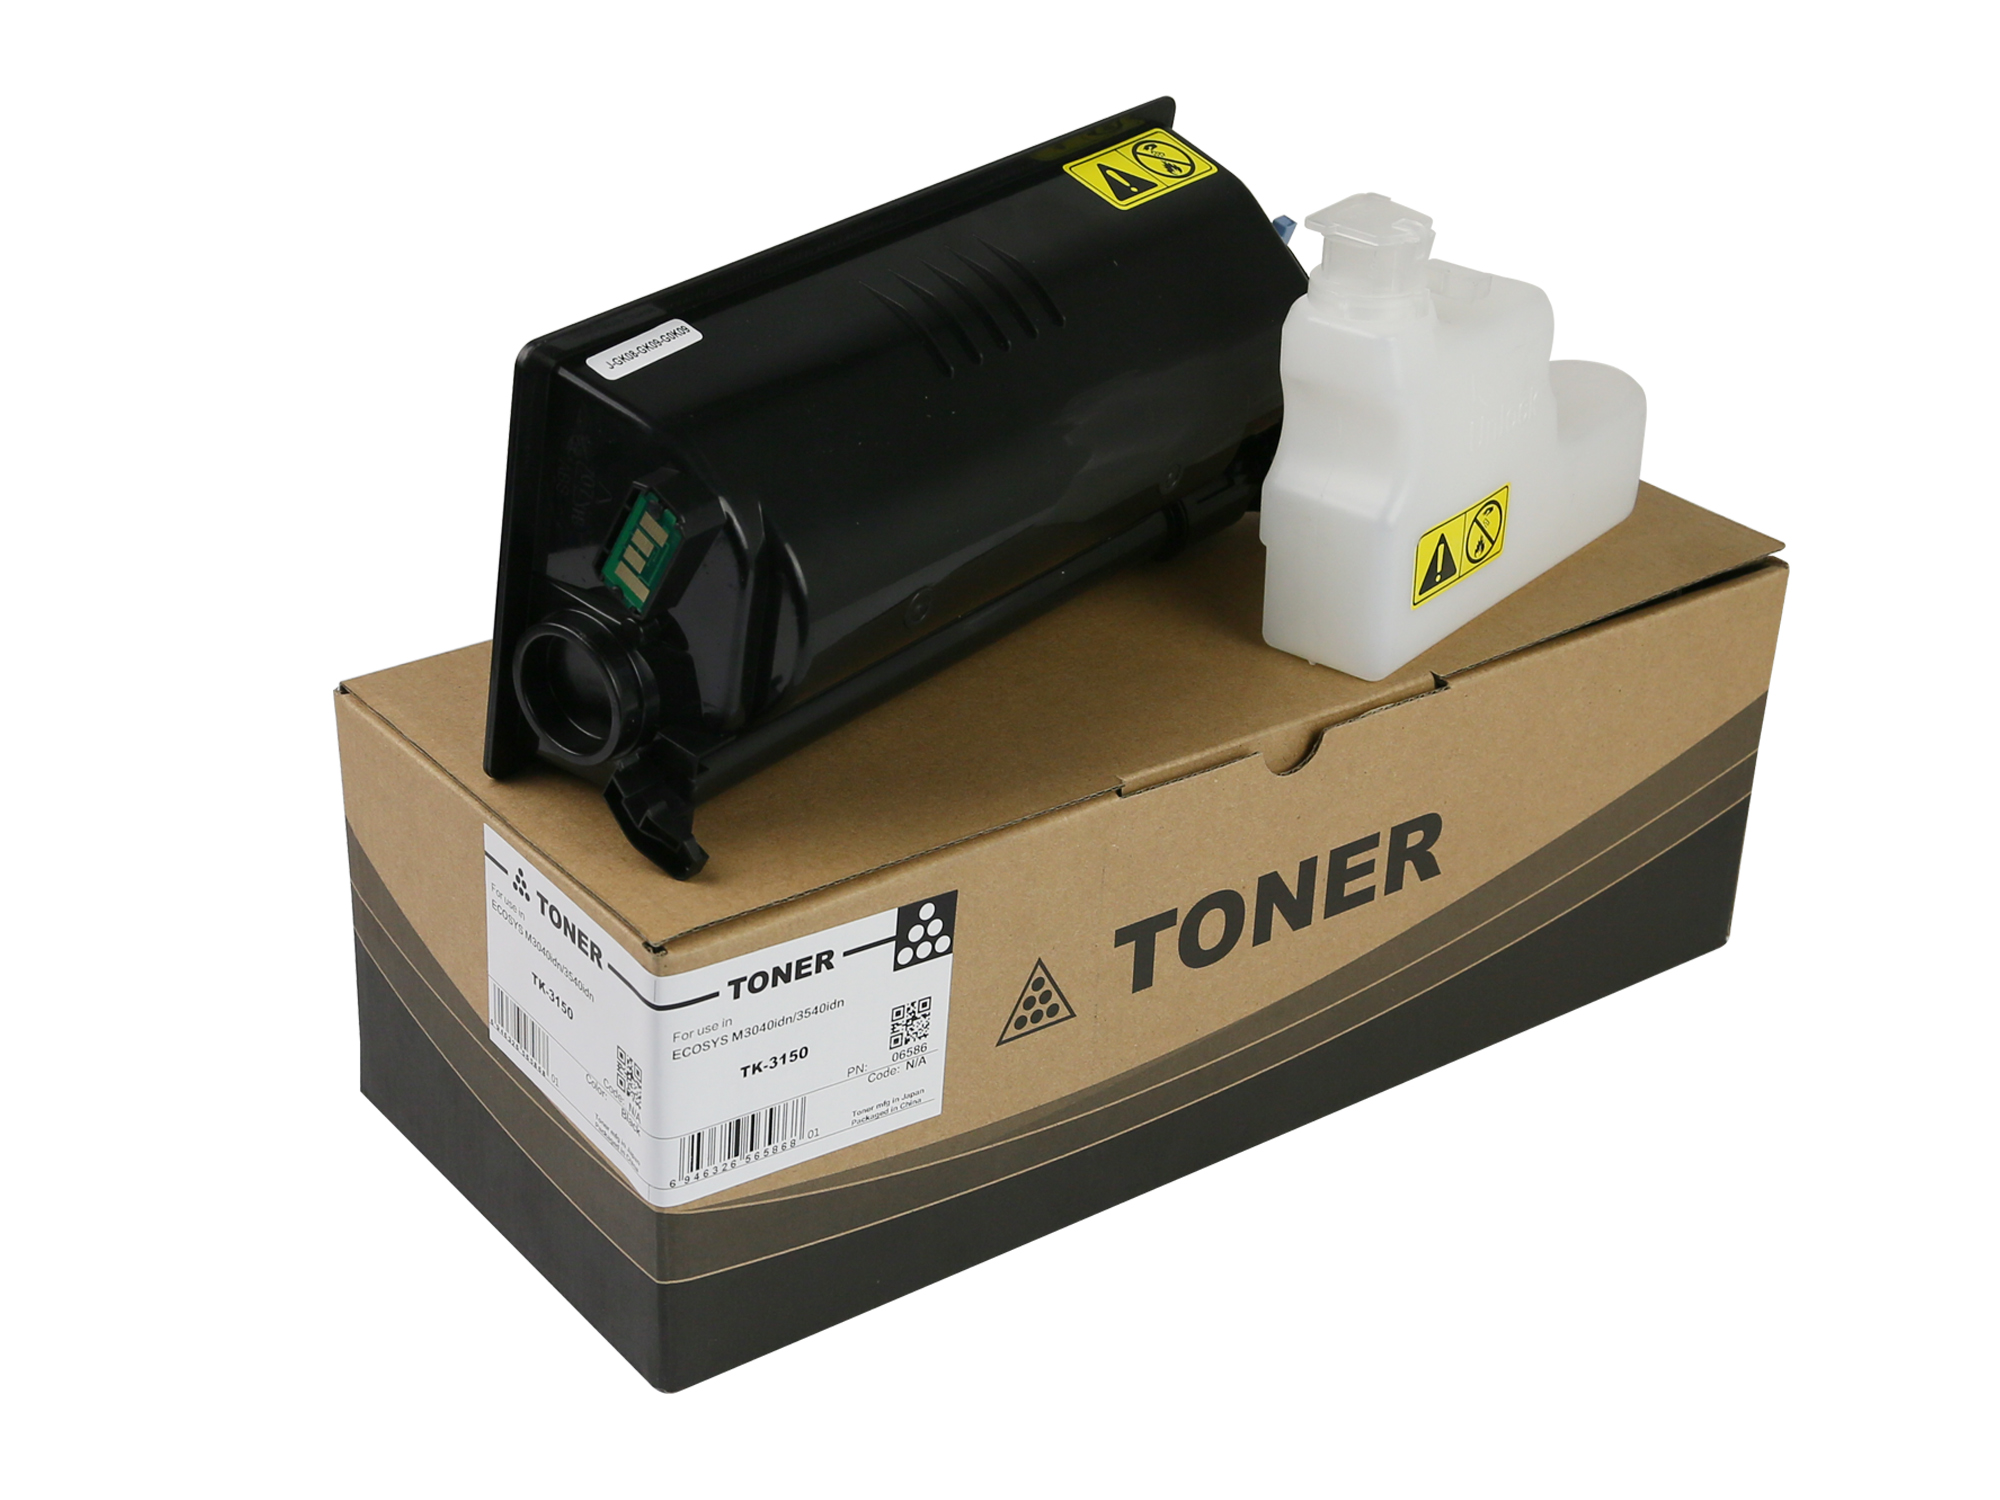 TK-3150 Toner Cartridge for Kyocera ECOSYS M3040idn